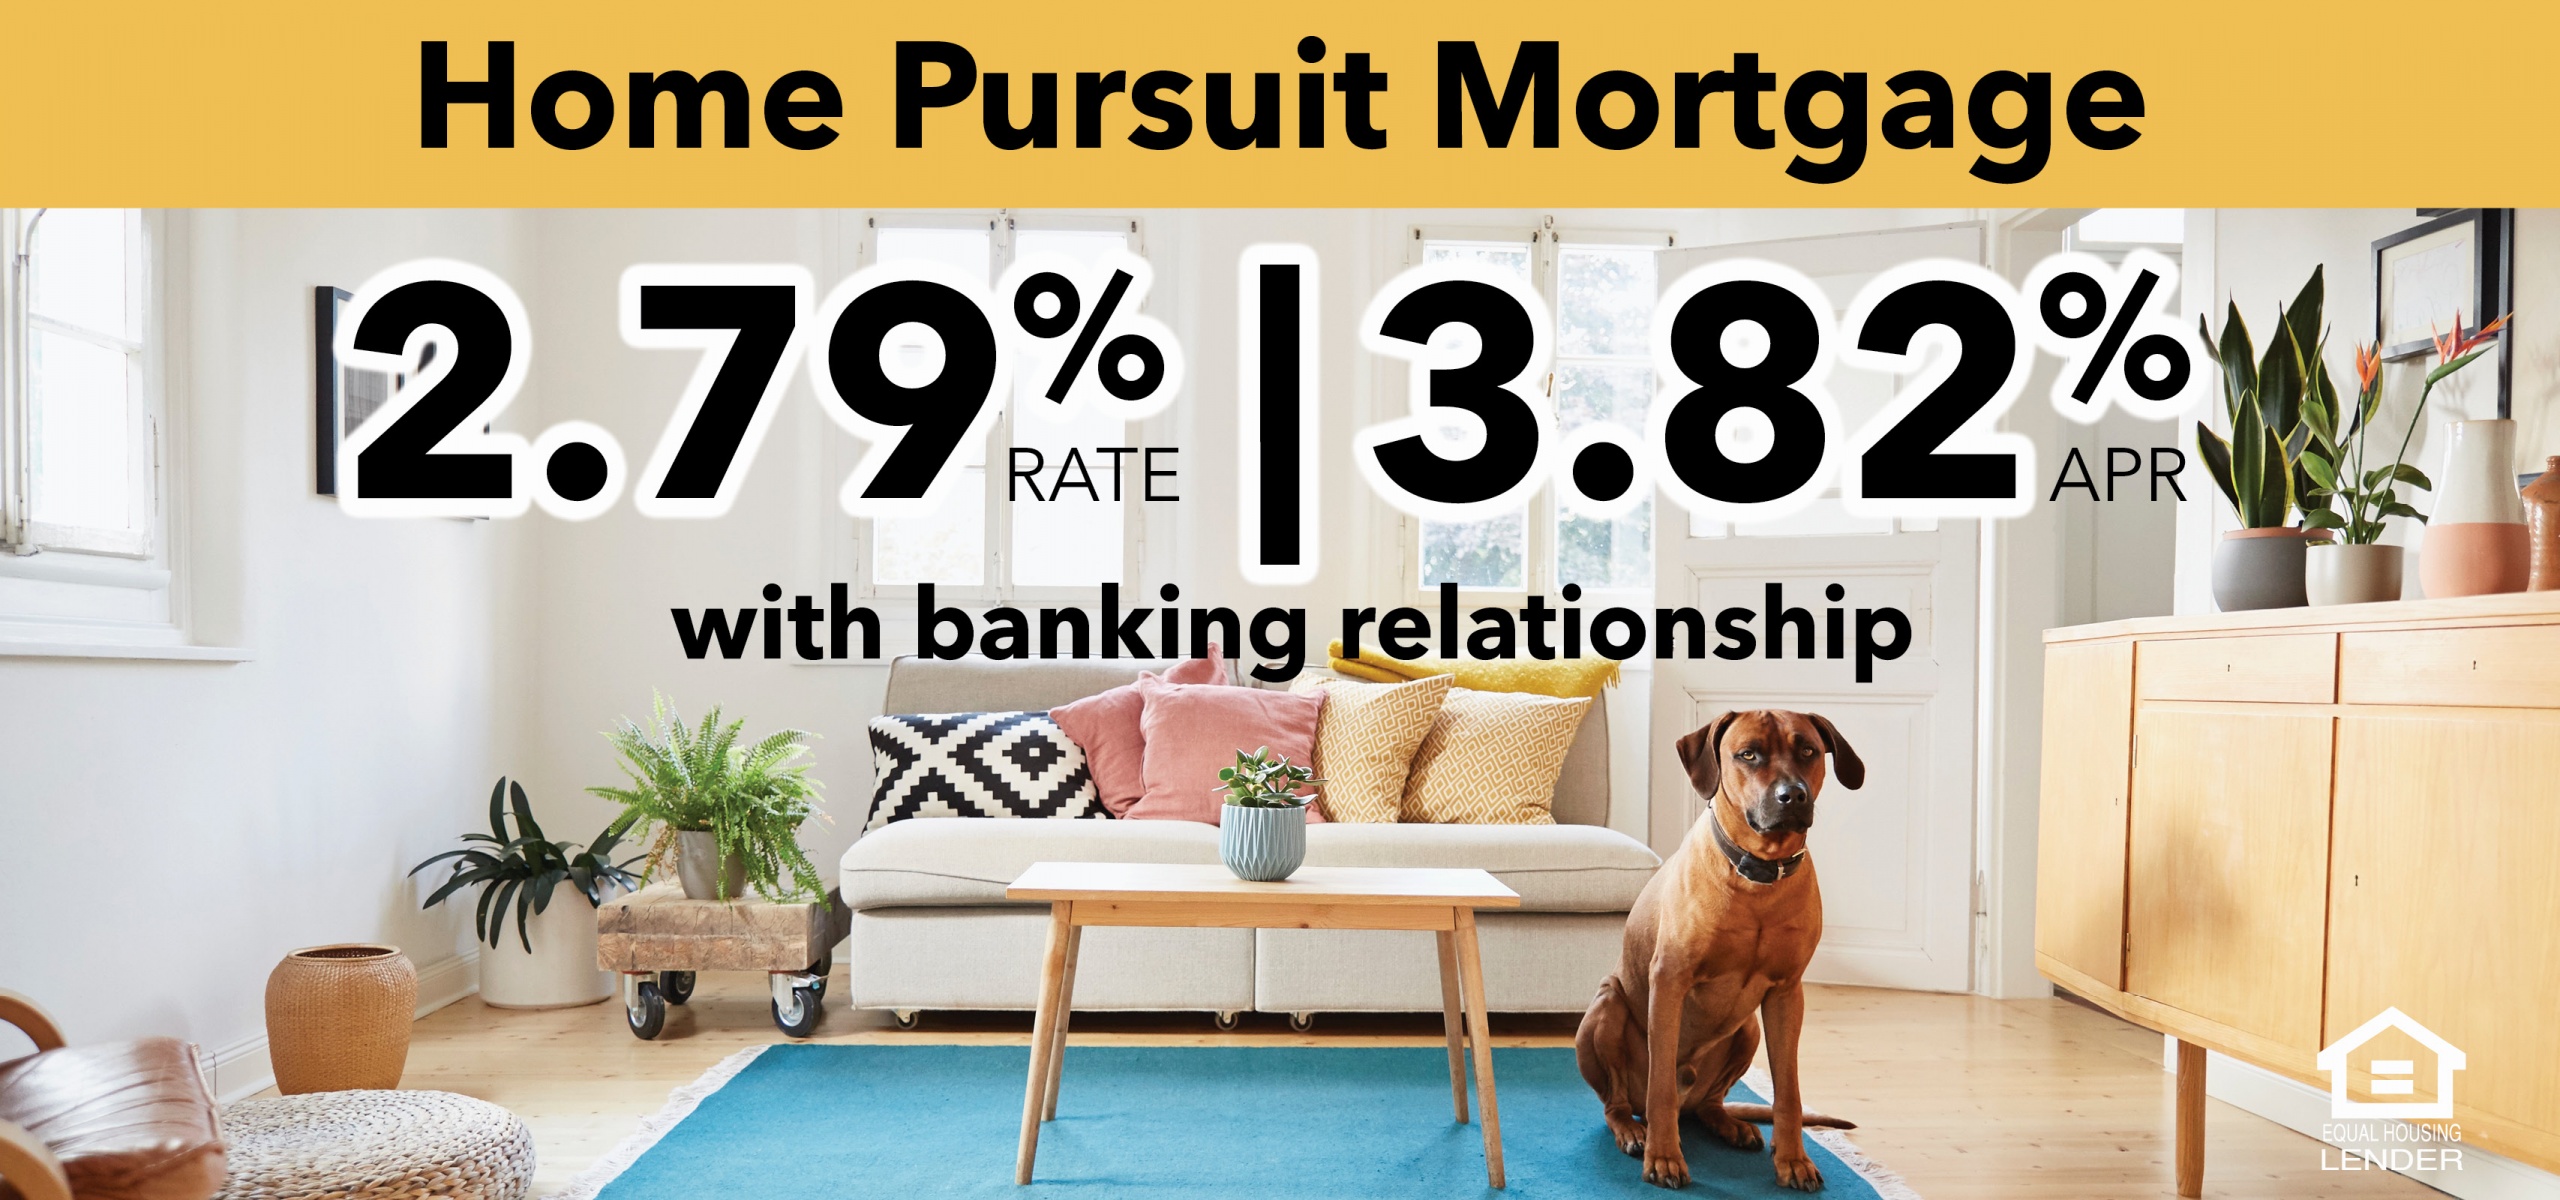 Home Pursuit Mortgage Program - 2.79% APY/3.82%